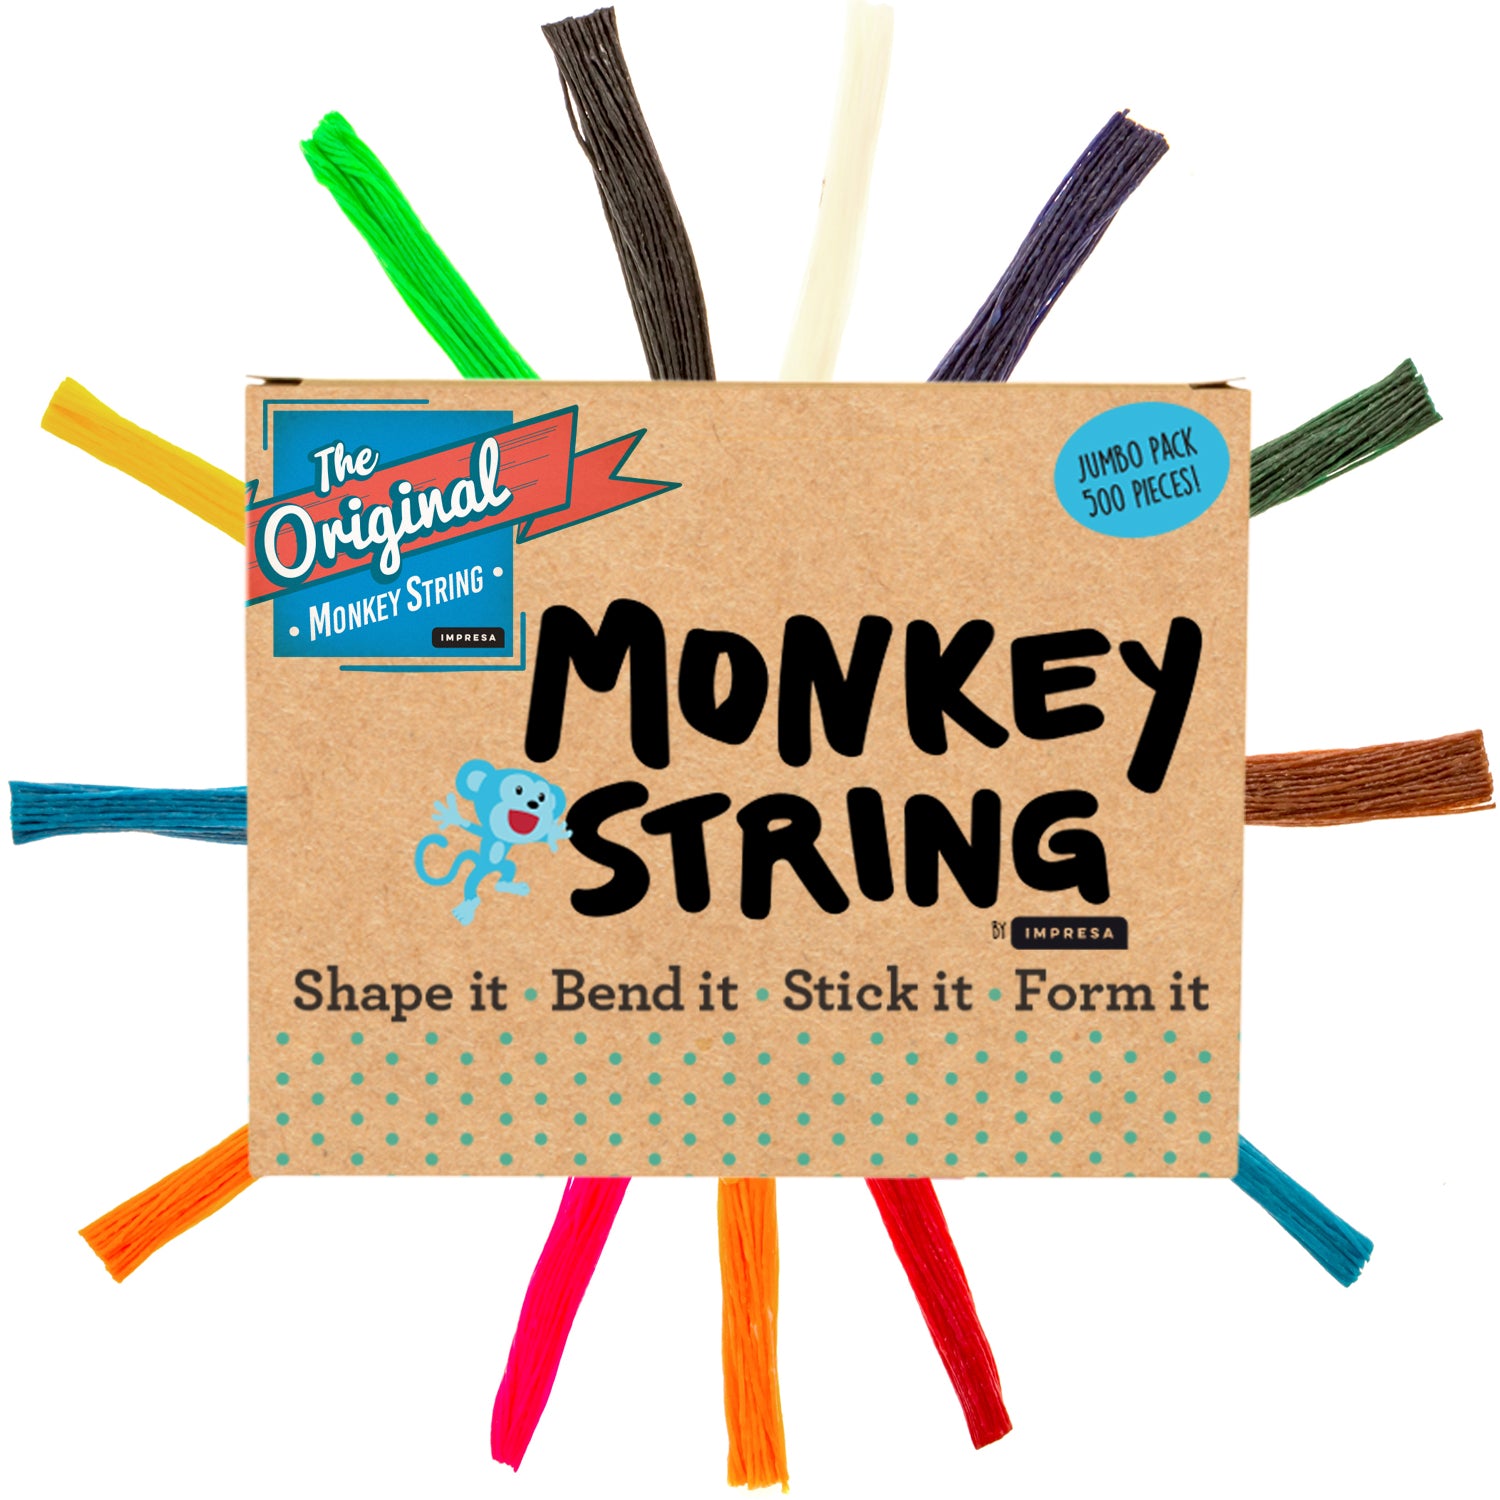 Monkey String  A Great Alternative To Wikki / Wiki Stix and